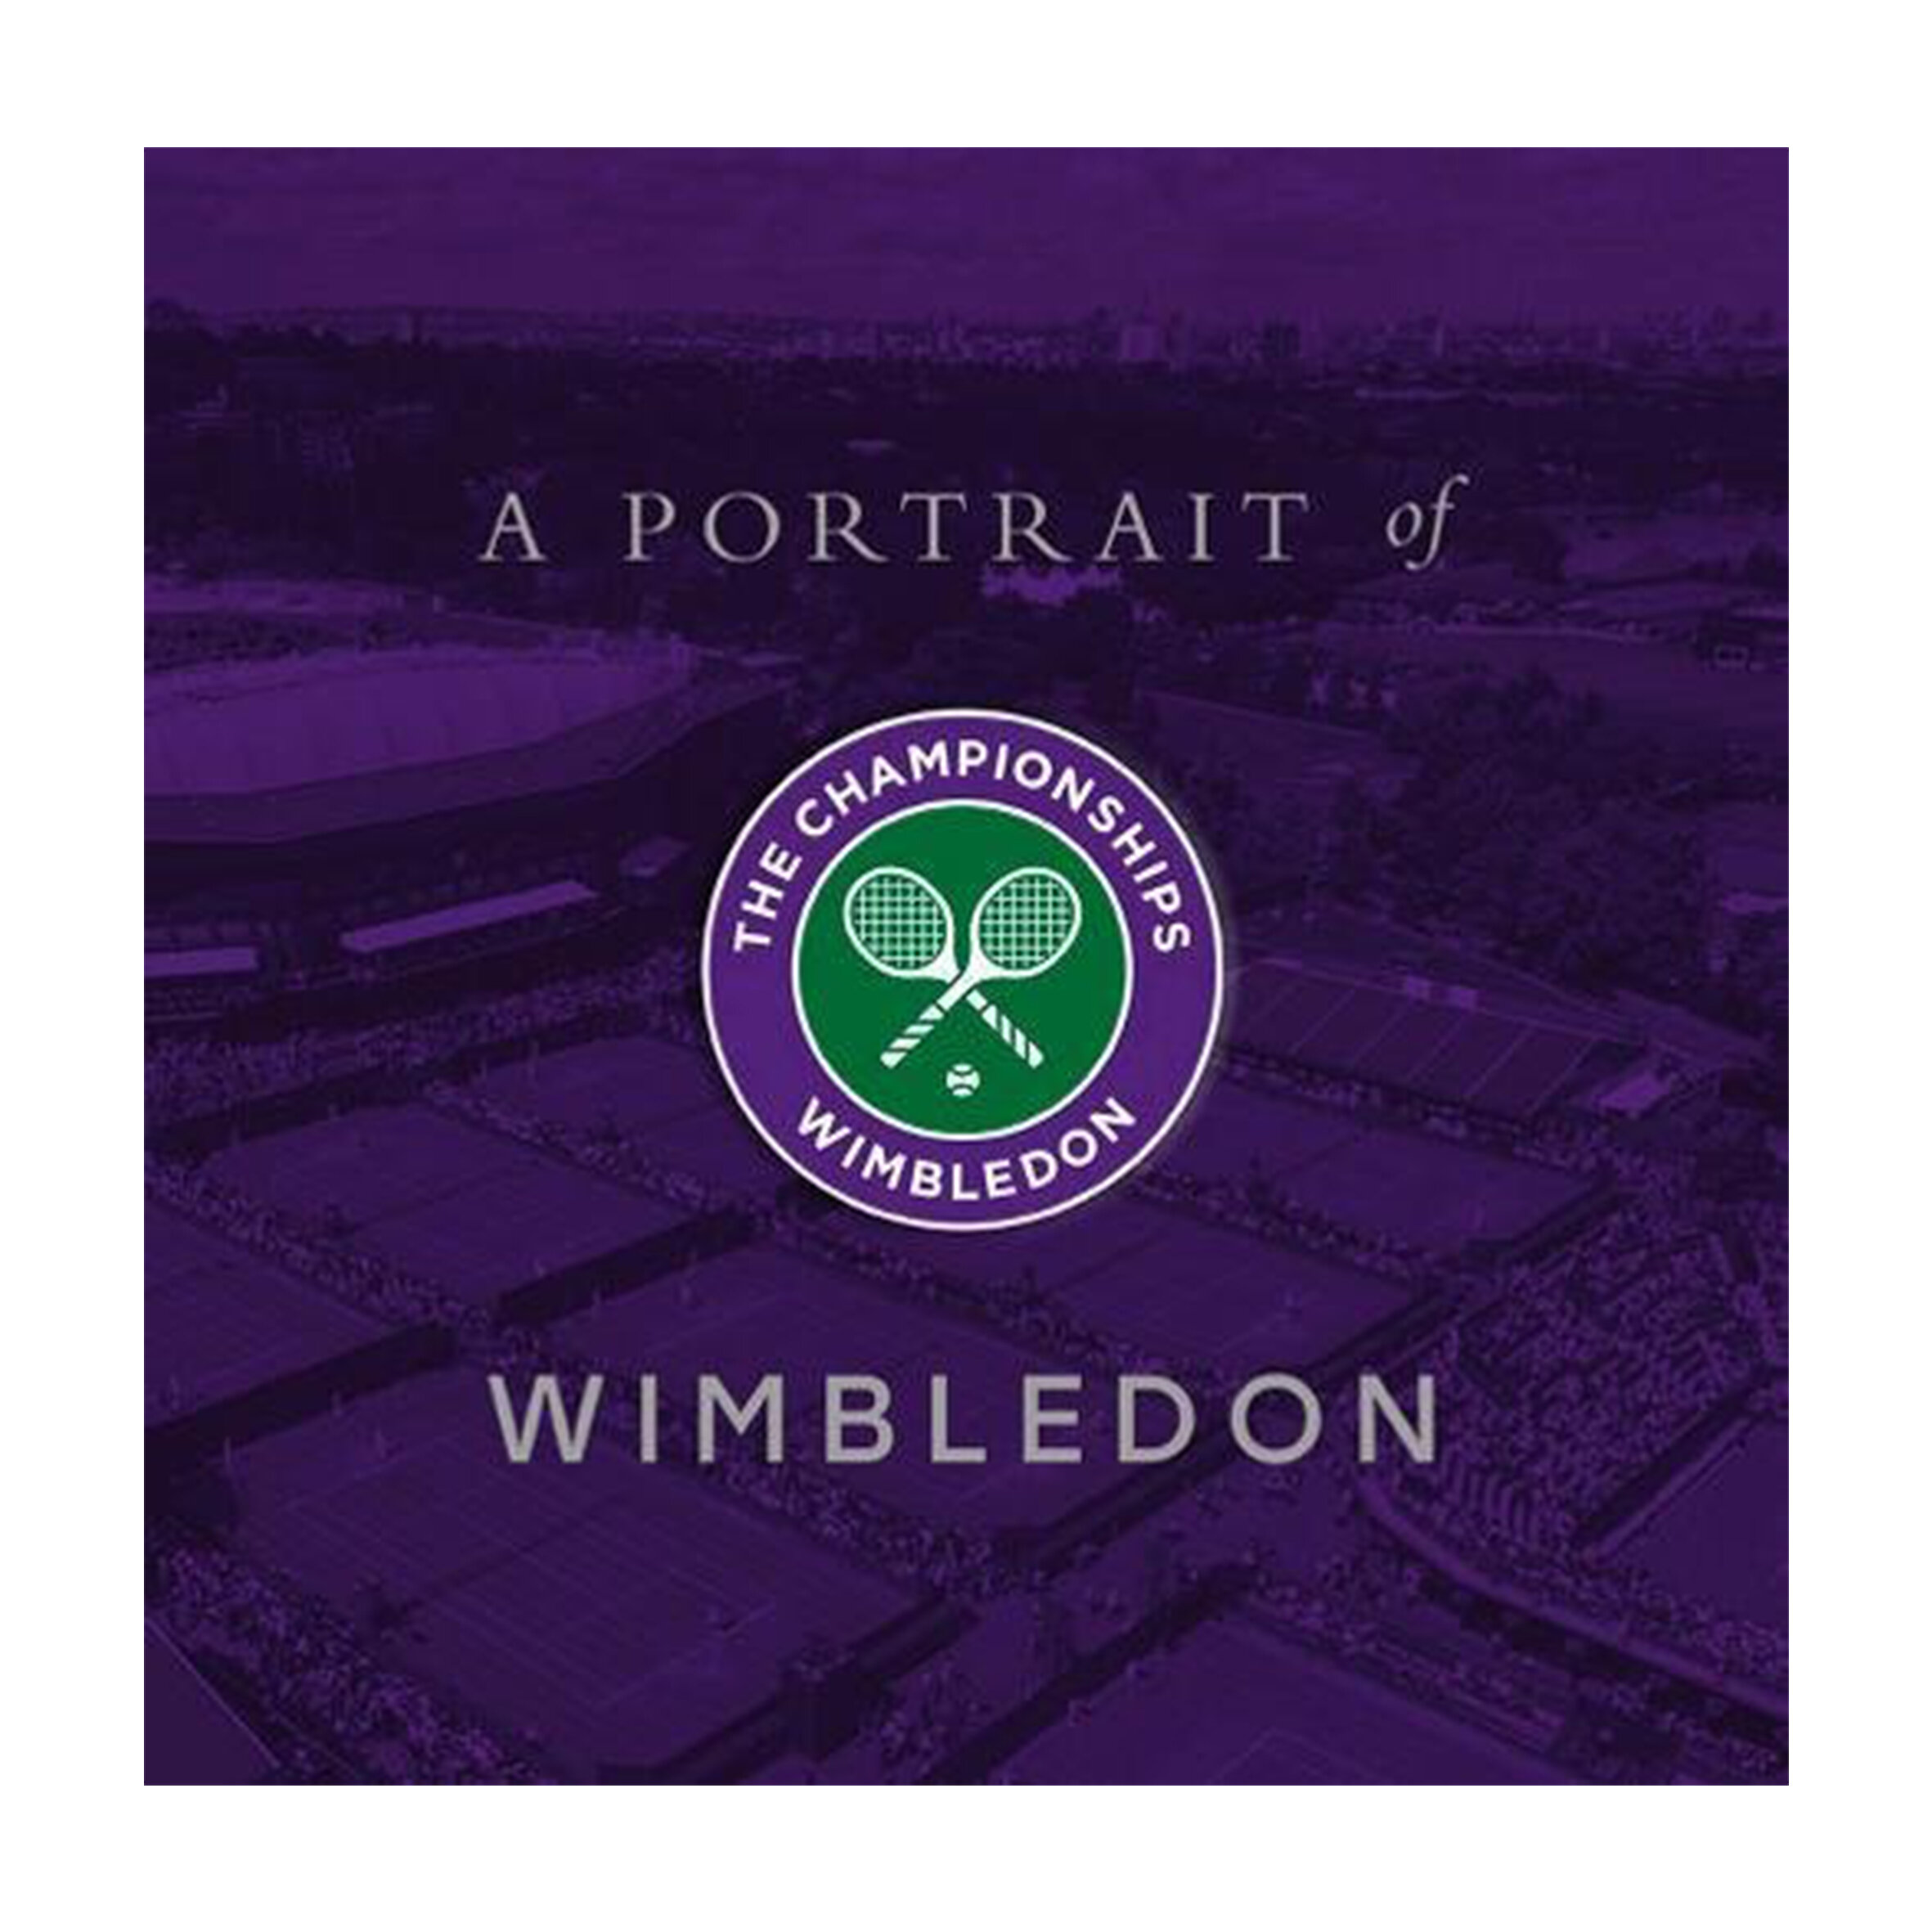 A portrait of Wimbledon copy.jpg